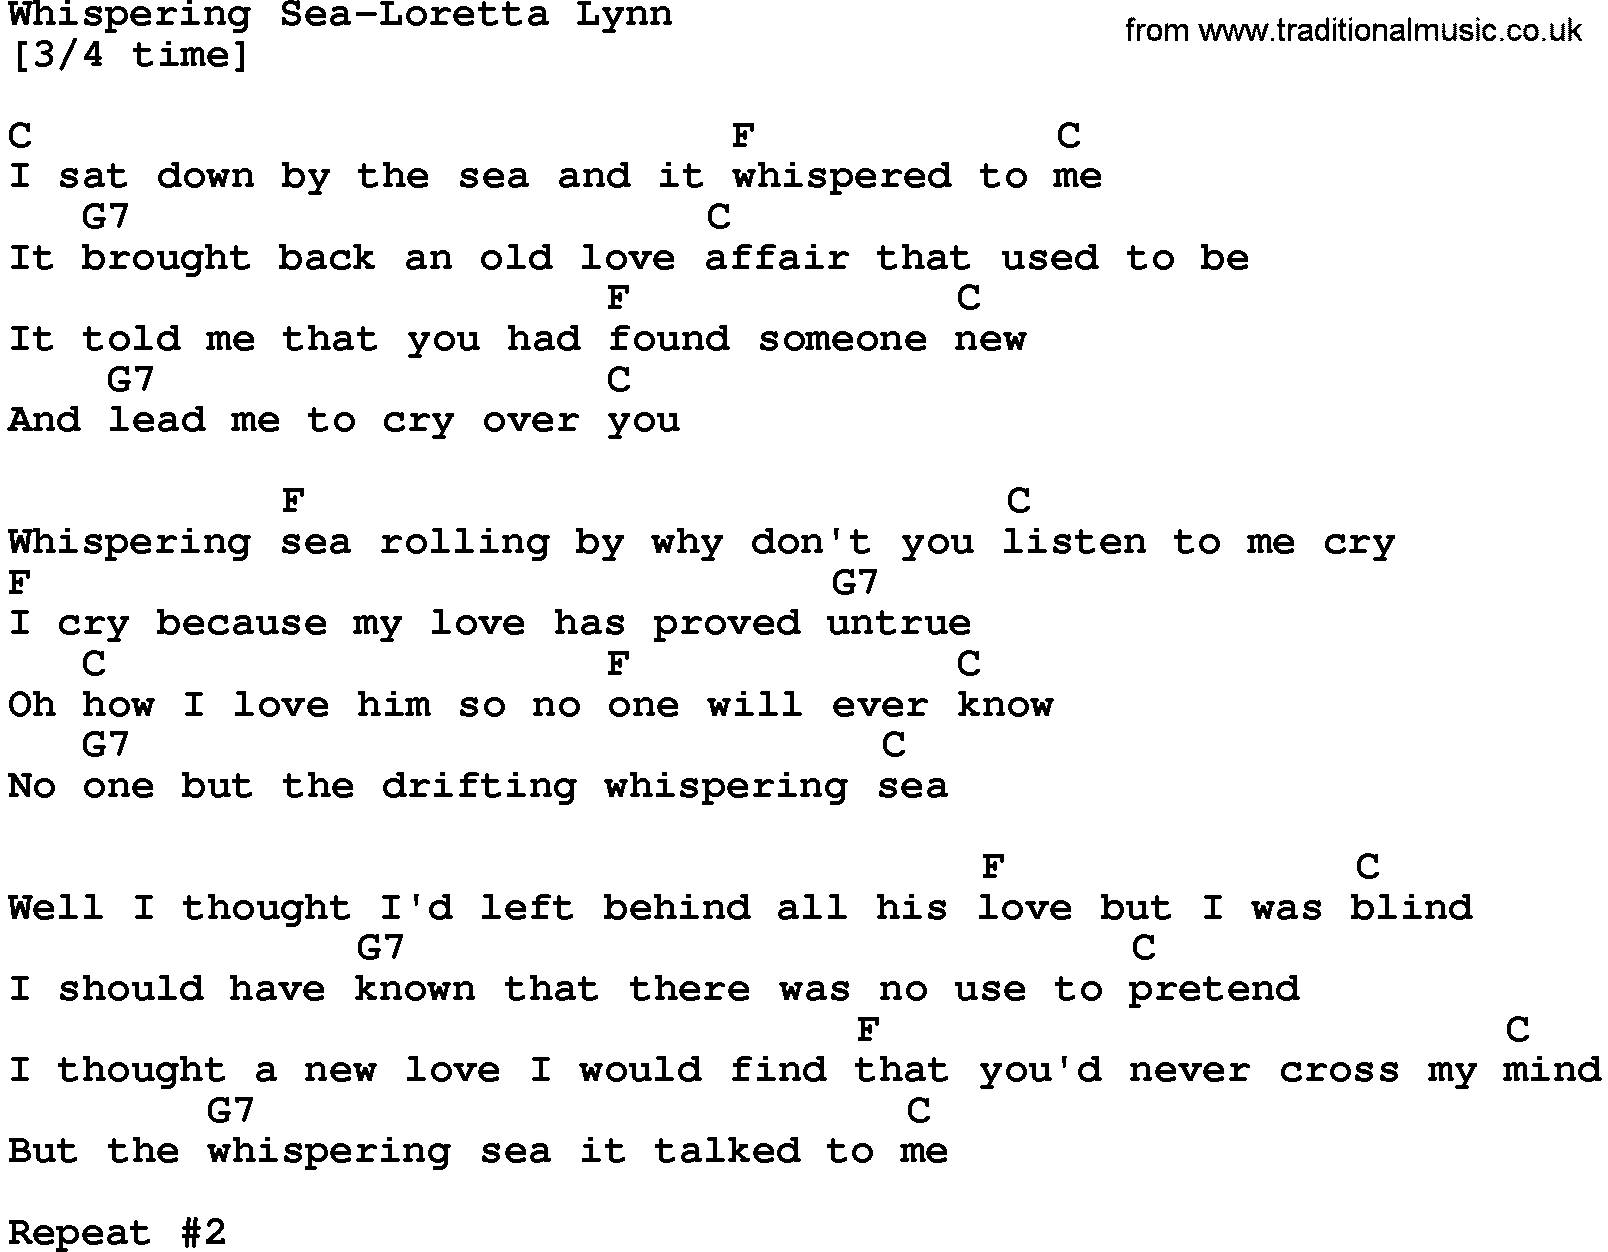 Country music song: Whispering Sea-Loretta Lynn lyrics and chords